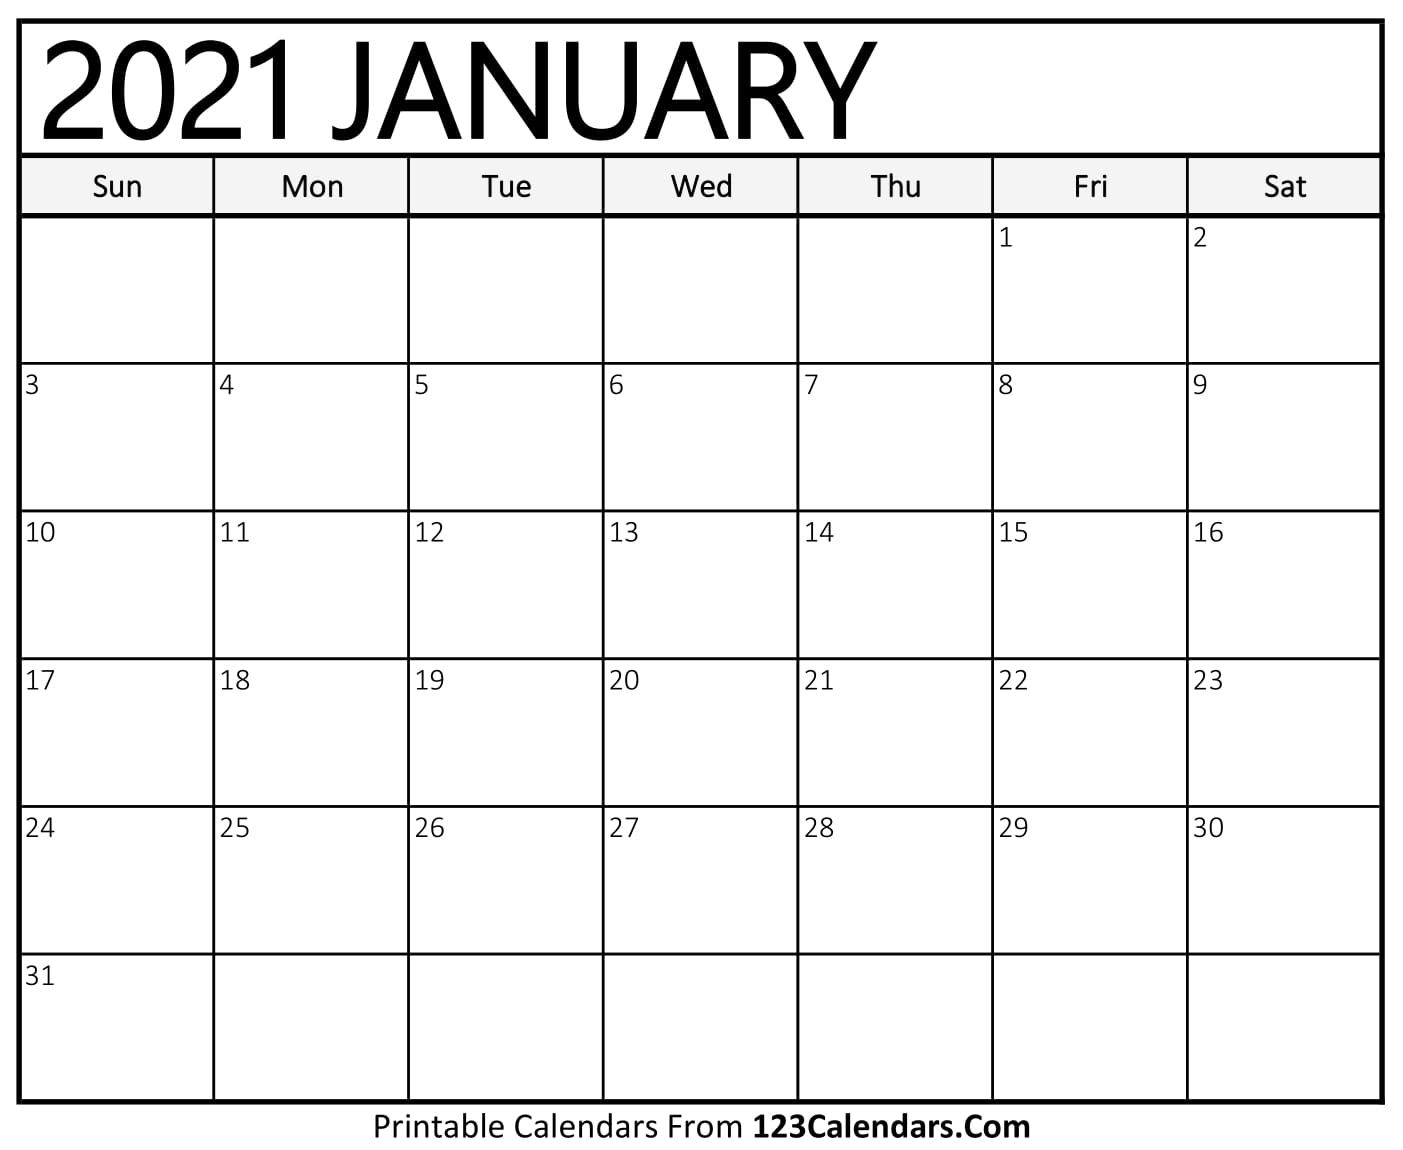 Printable January 2021 Calendar Templates | 123Calendars